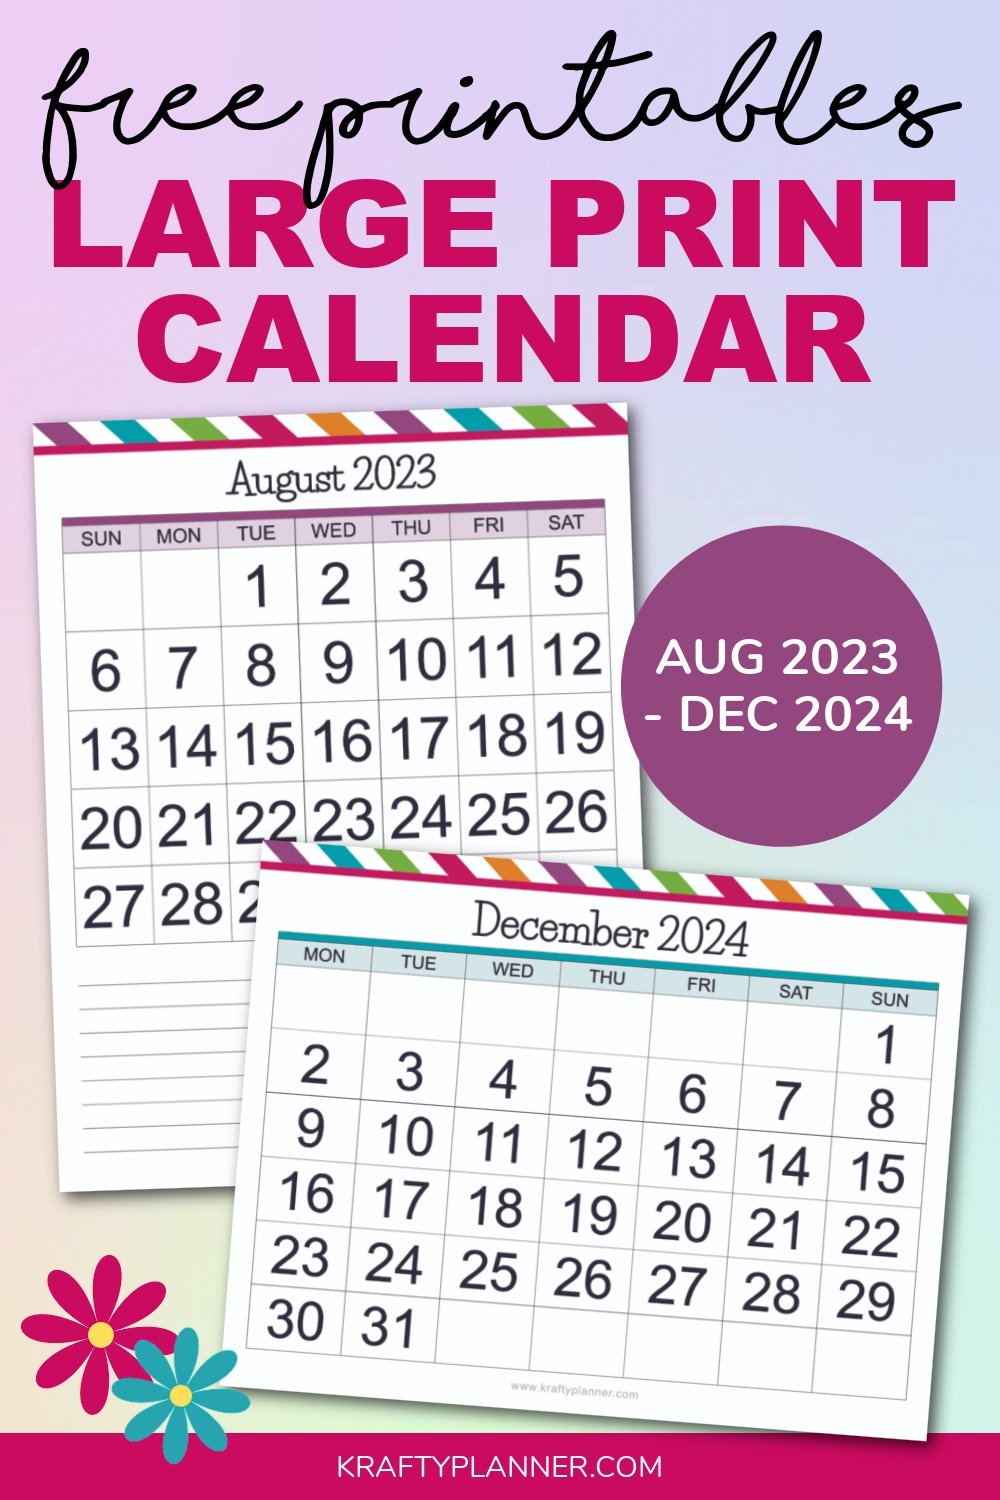 Free Printable Large Print Calendars: August 2023 - December 2024 throughout Free Printable Calendar 2024 Large Print